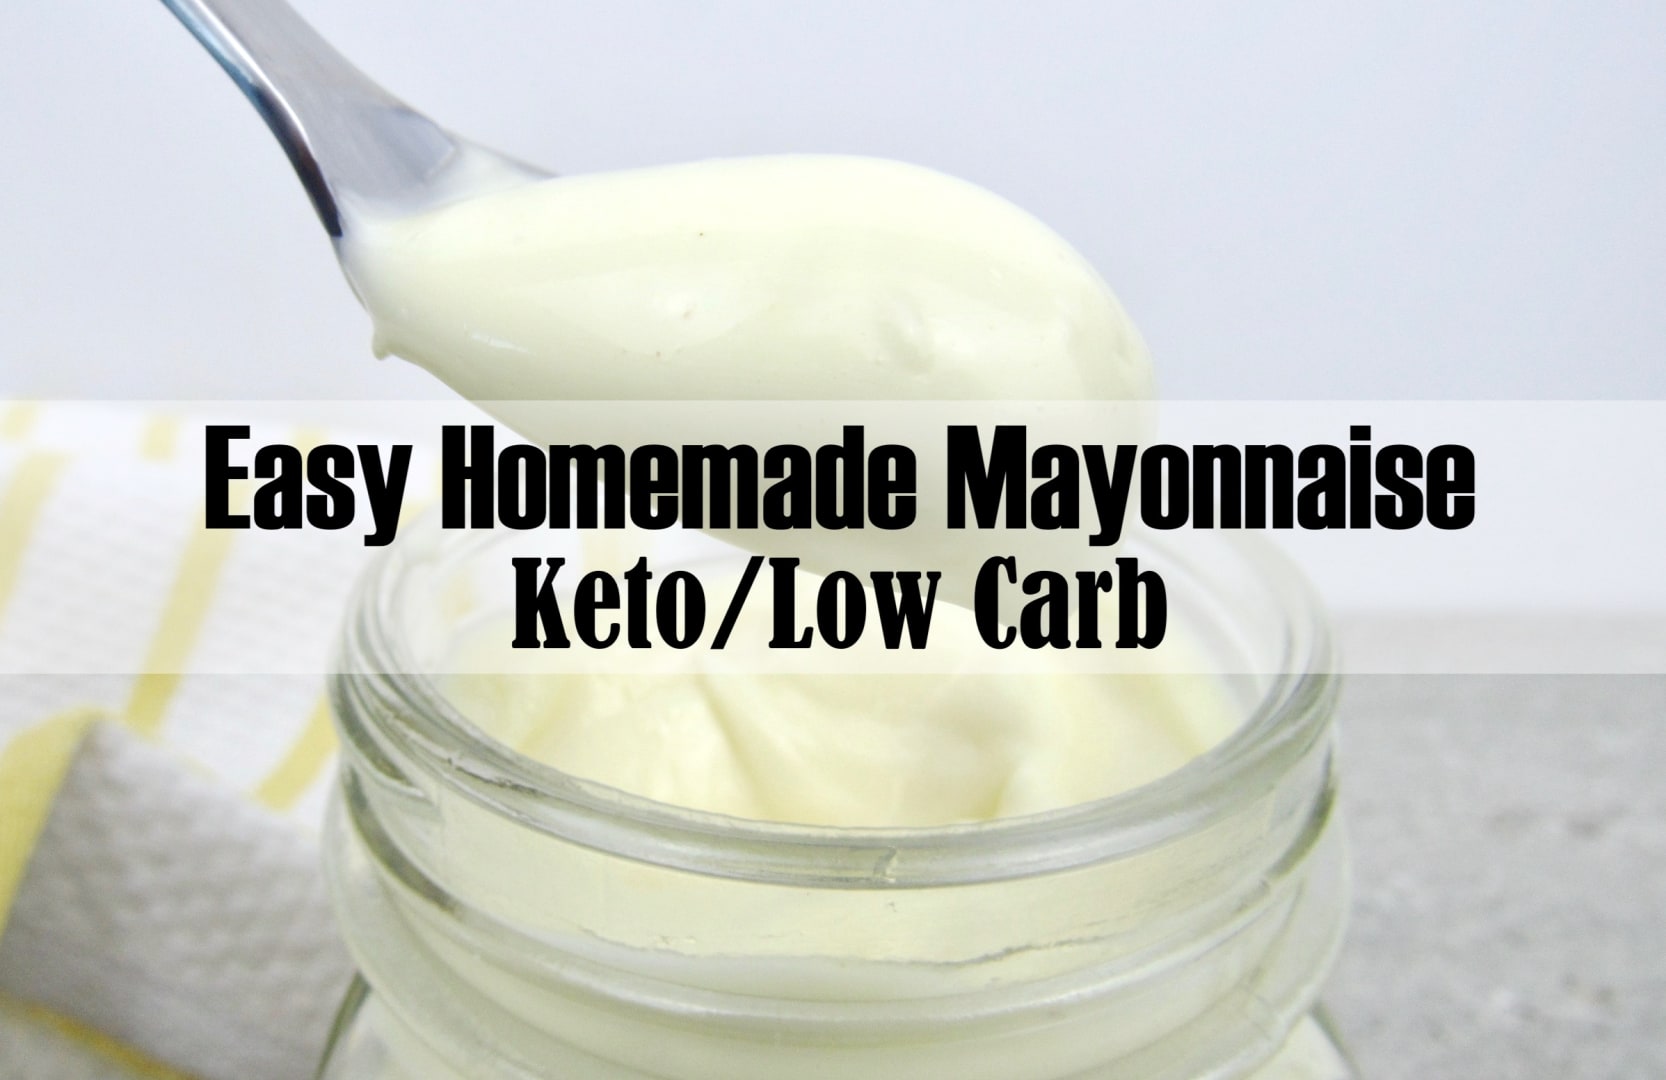 Easy Homemade Keto Mayonnaise - Keto Cooking Christian